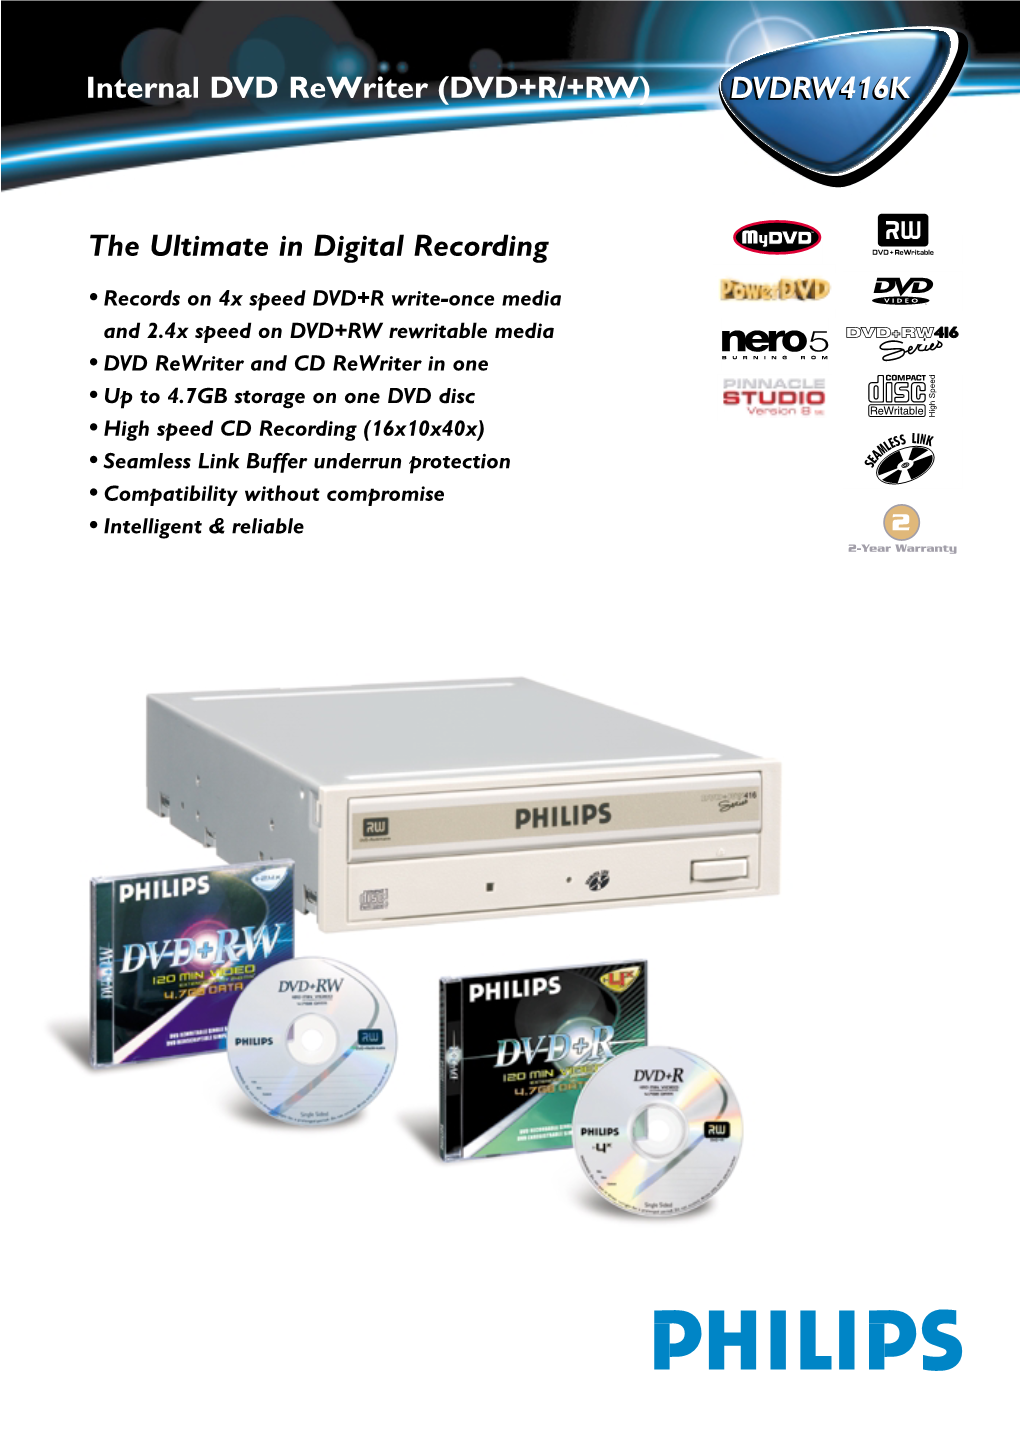 (DVD+R/+RW) the Ultimate in Digital Recording DVDRW416K